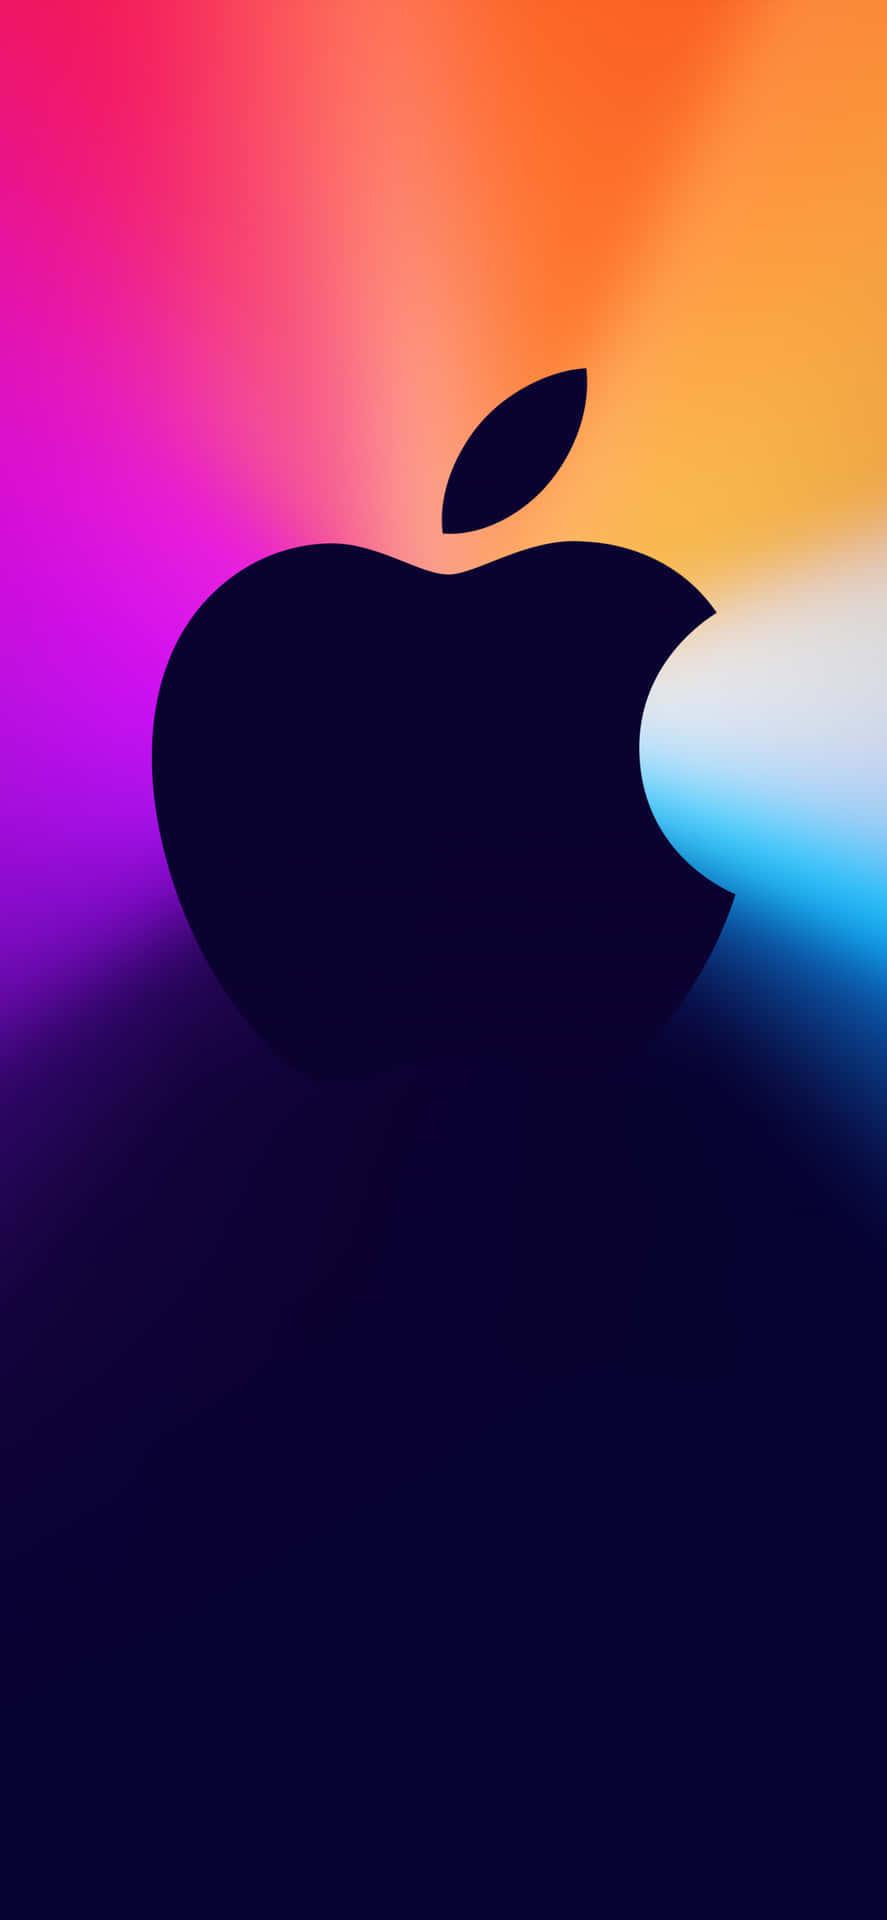 Download Iphone X Apple Logo Wallpaper | Wallpapers.com